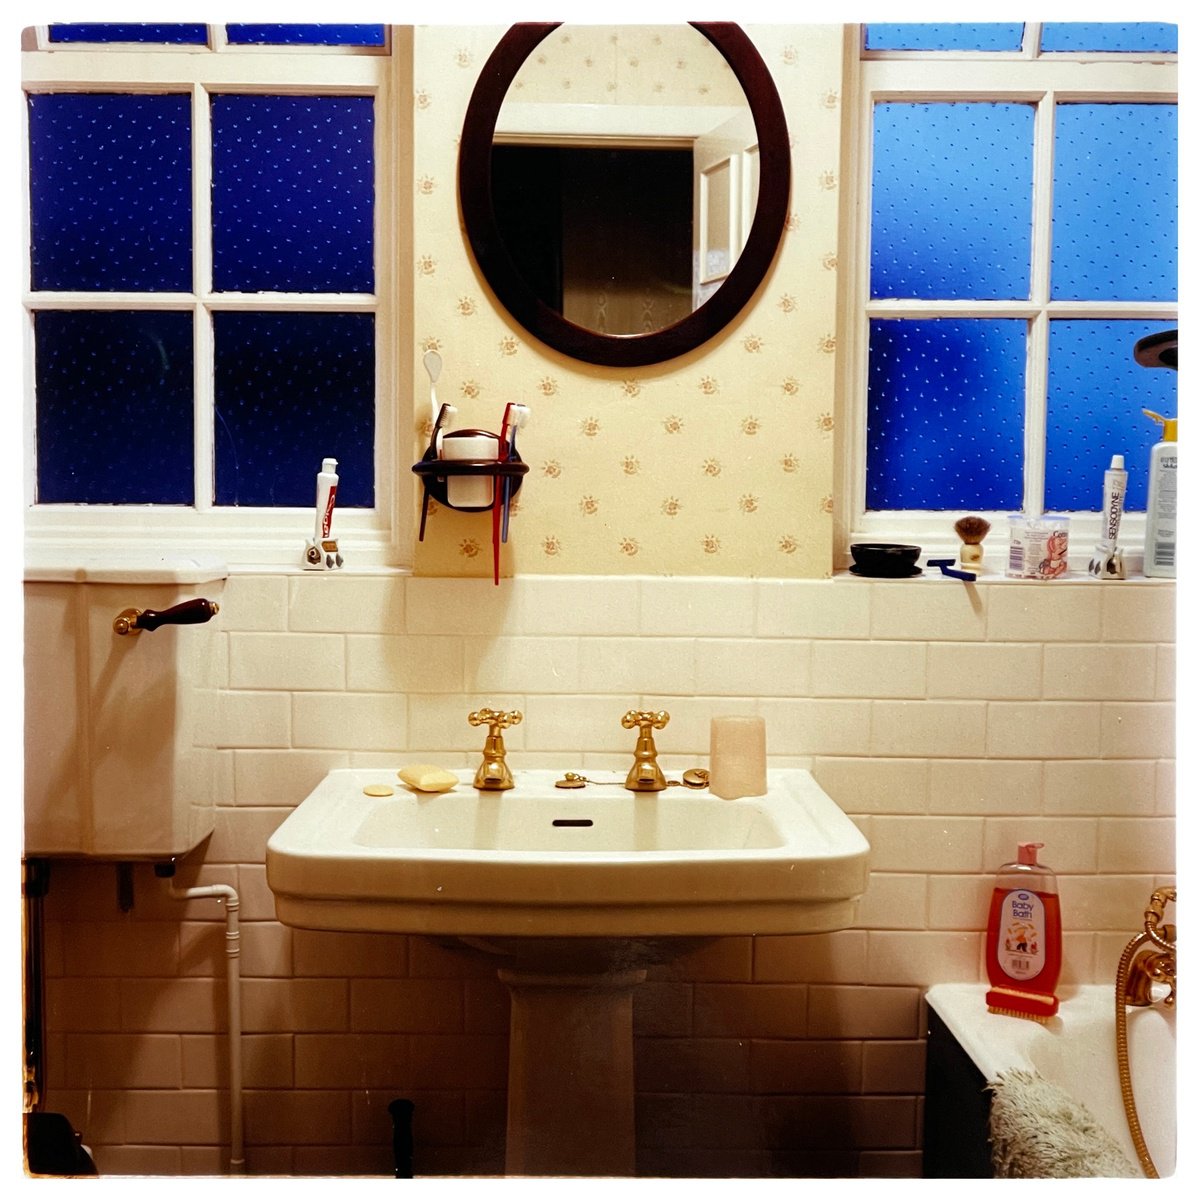 Bathroom Sink, Isle of Wight by Richard Heeps